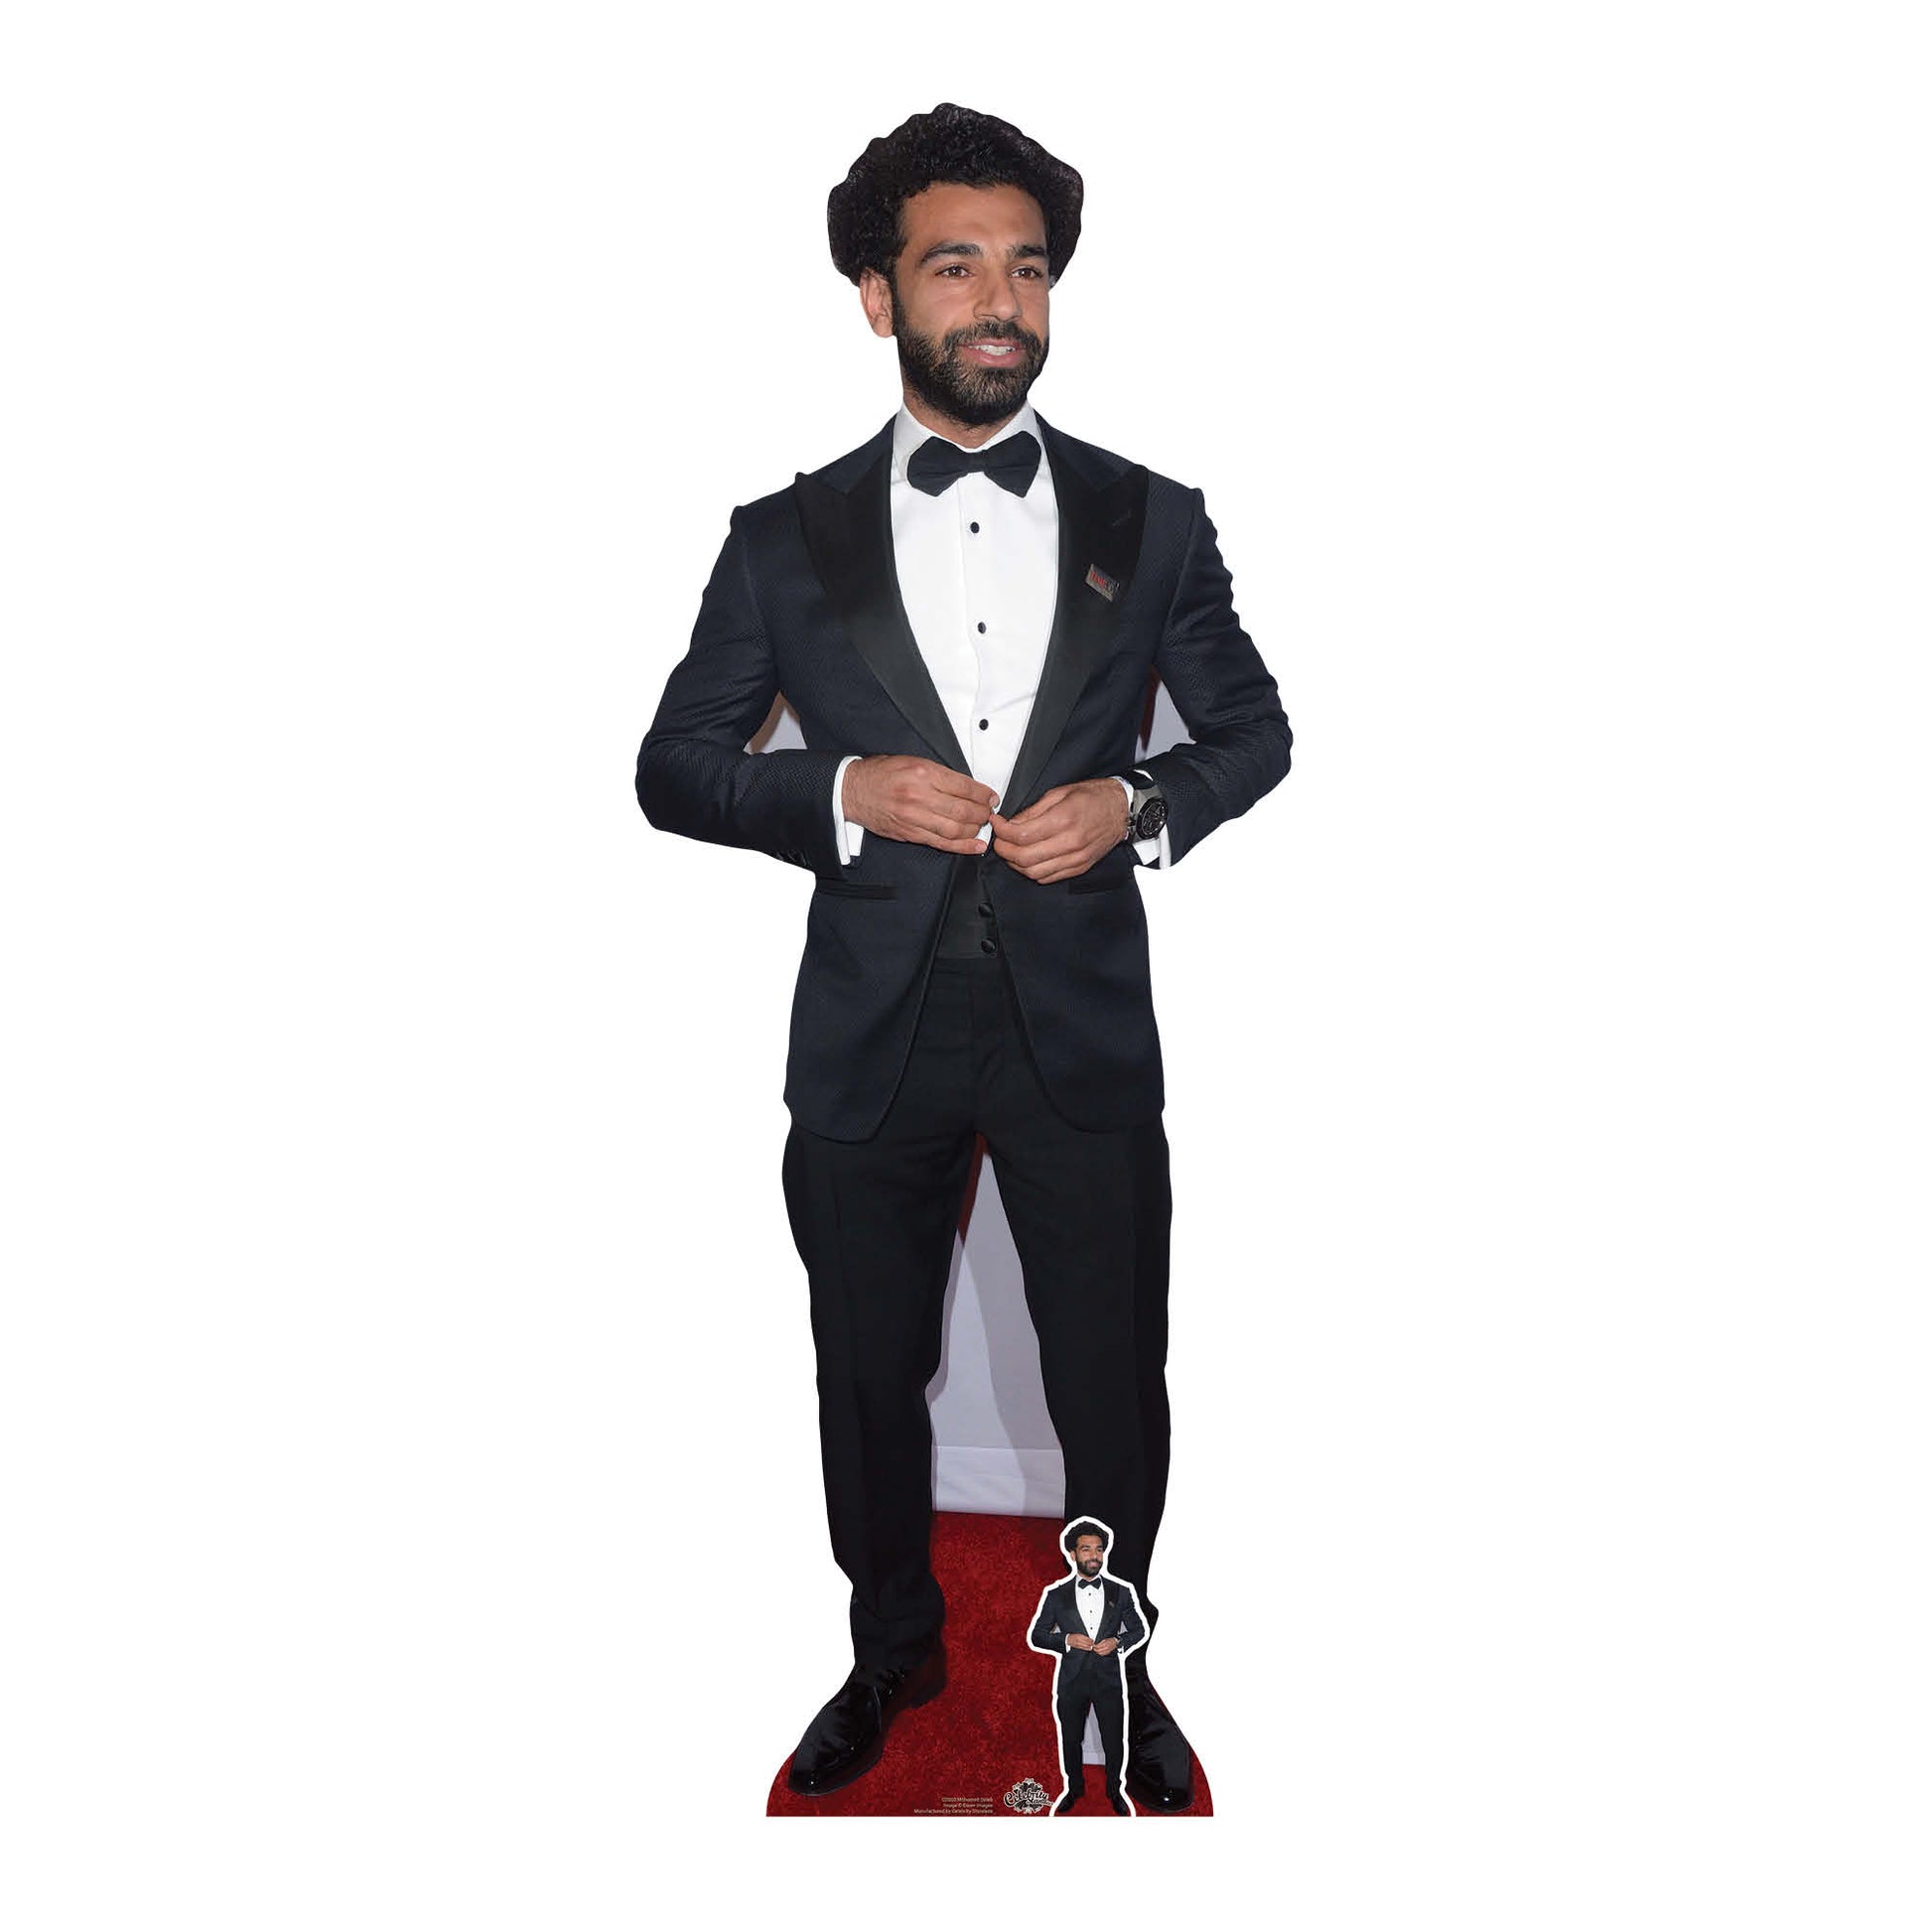 Mohamed Salah Footballer   Cardboard Cutout MyCardboardCutout